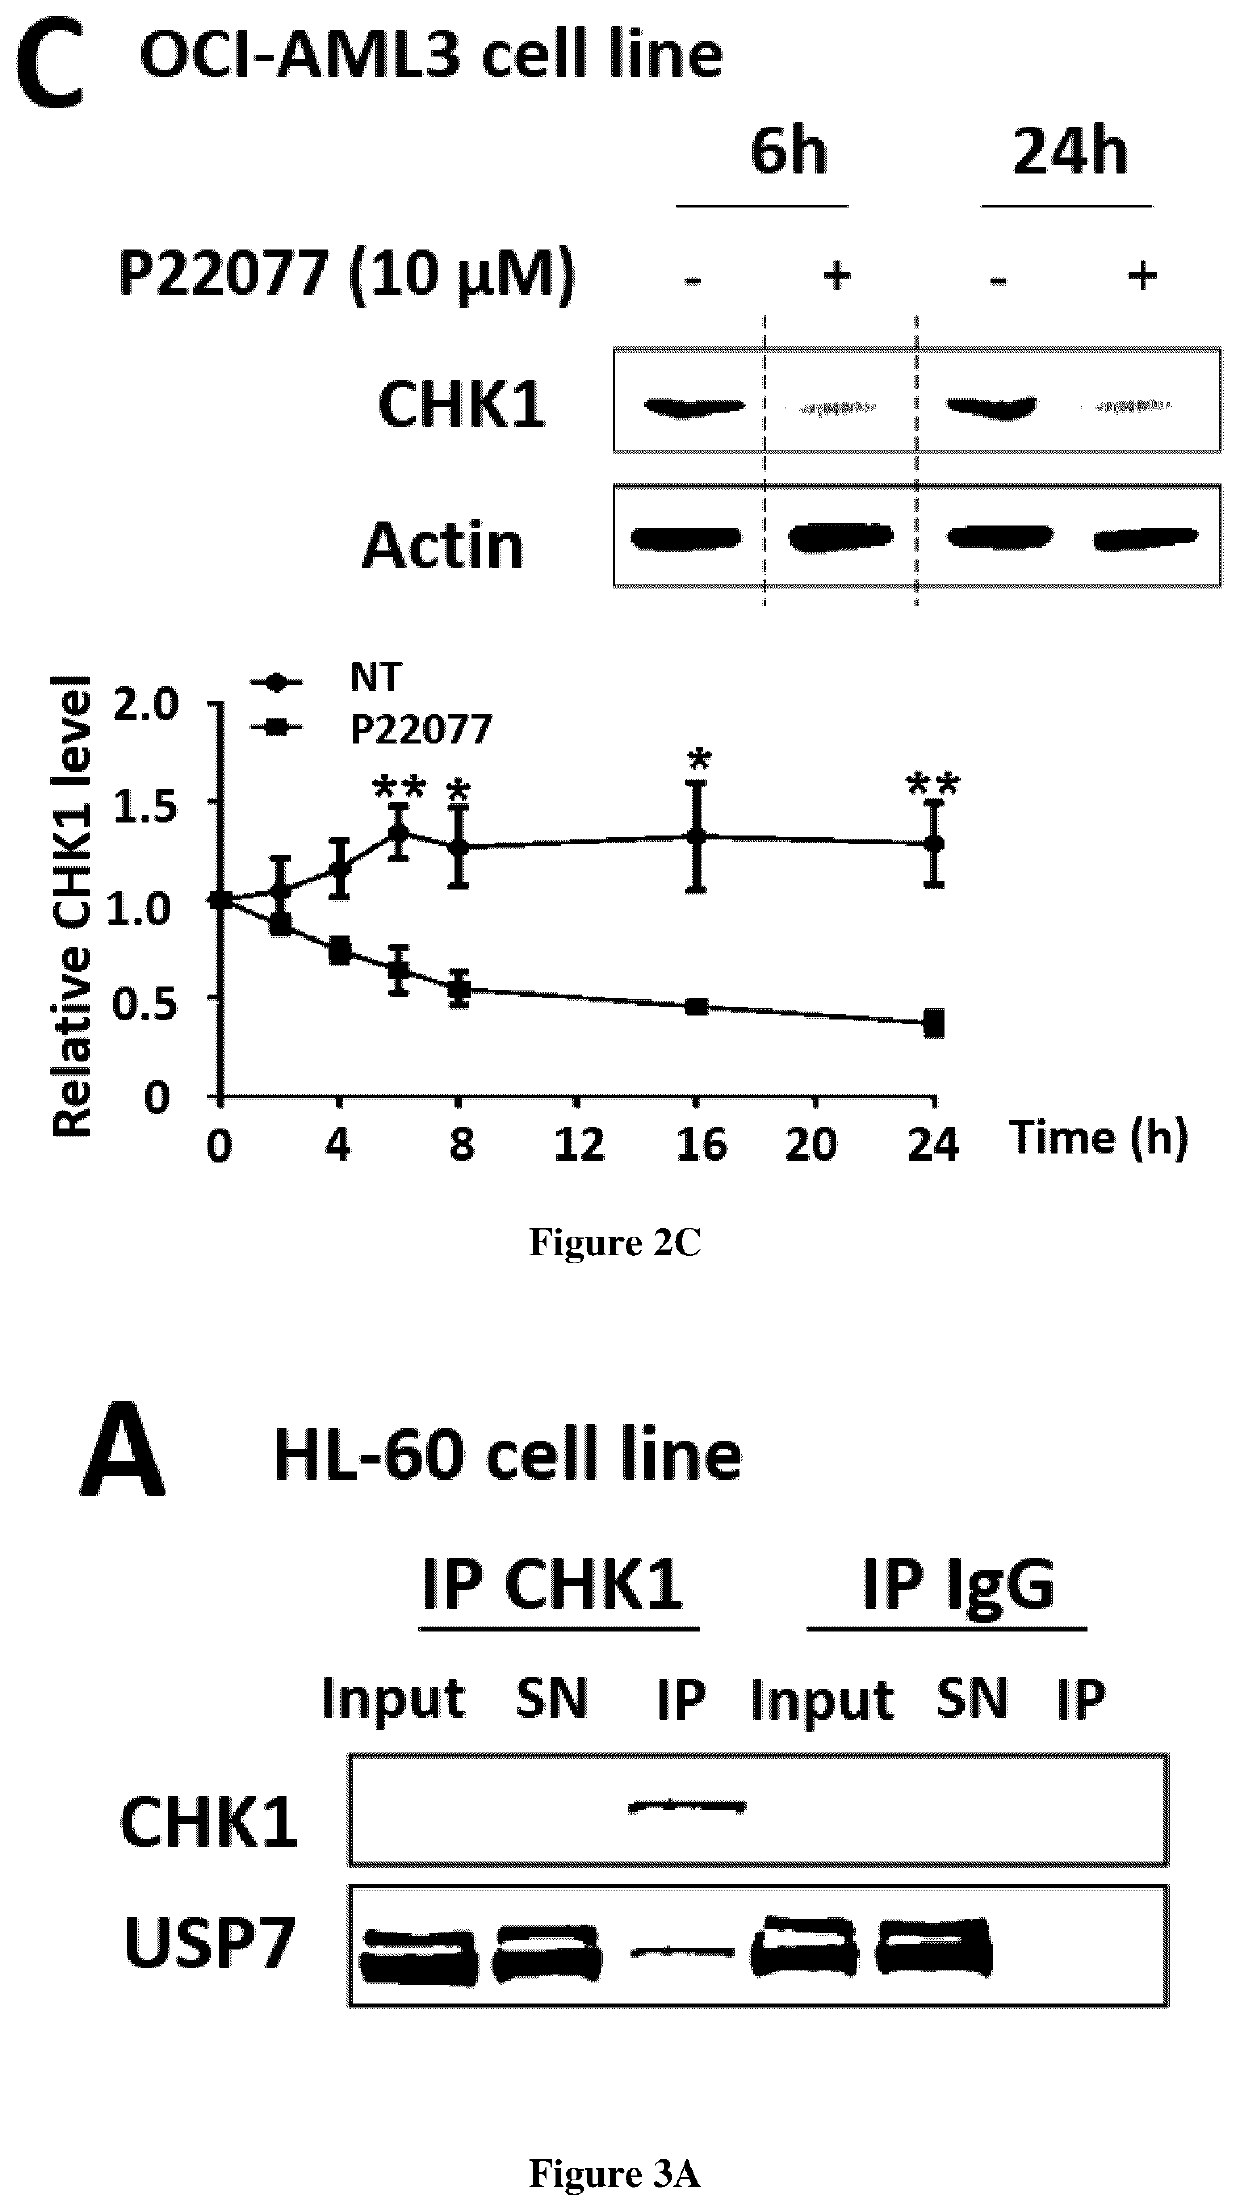 Use of usp7 inhibitors for the treatment of acute myeloid leukemia (AML)